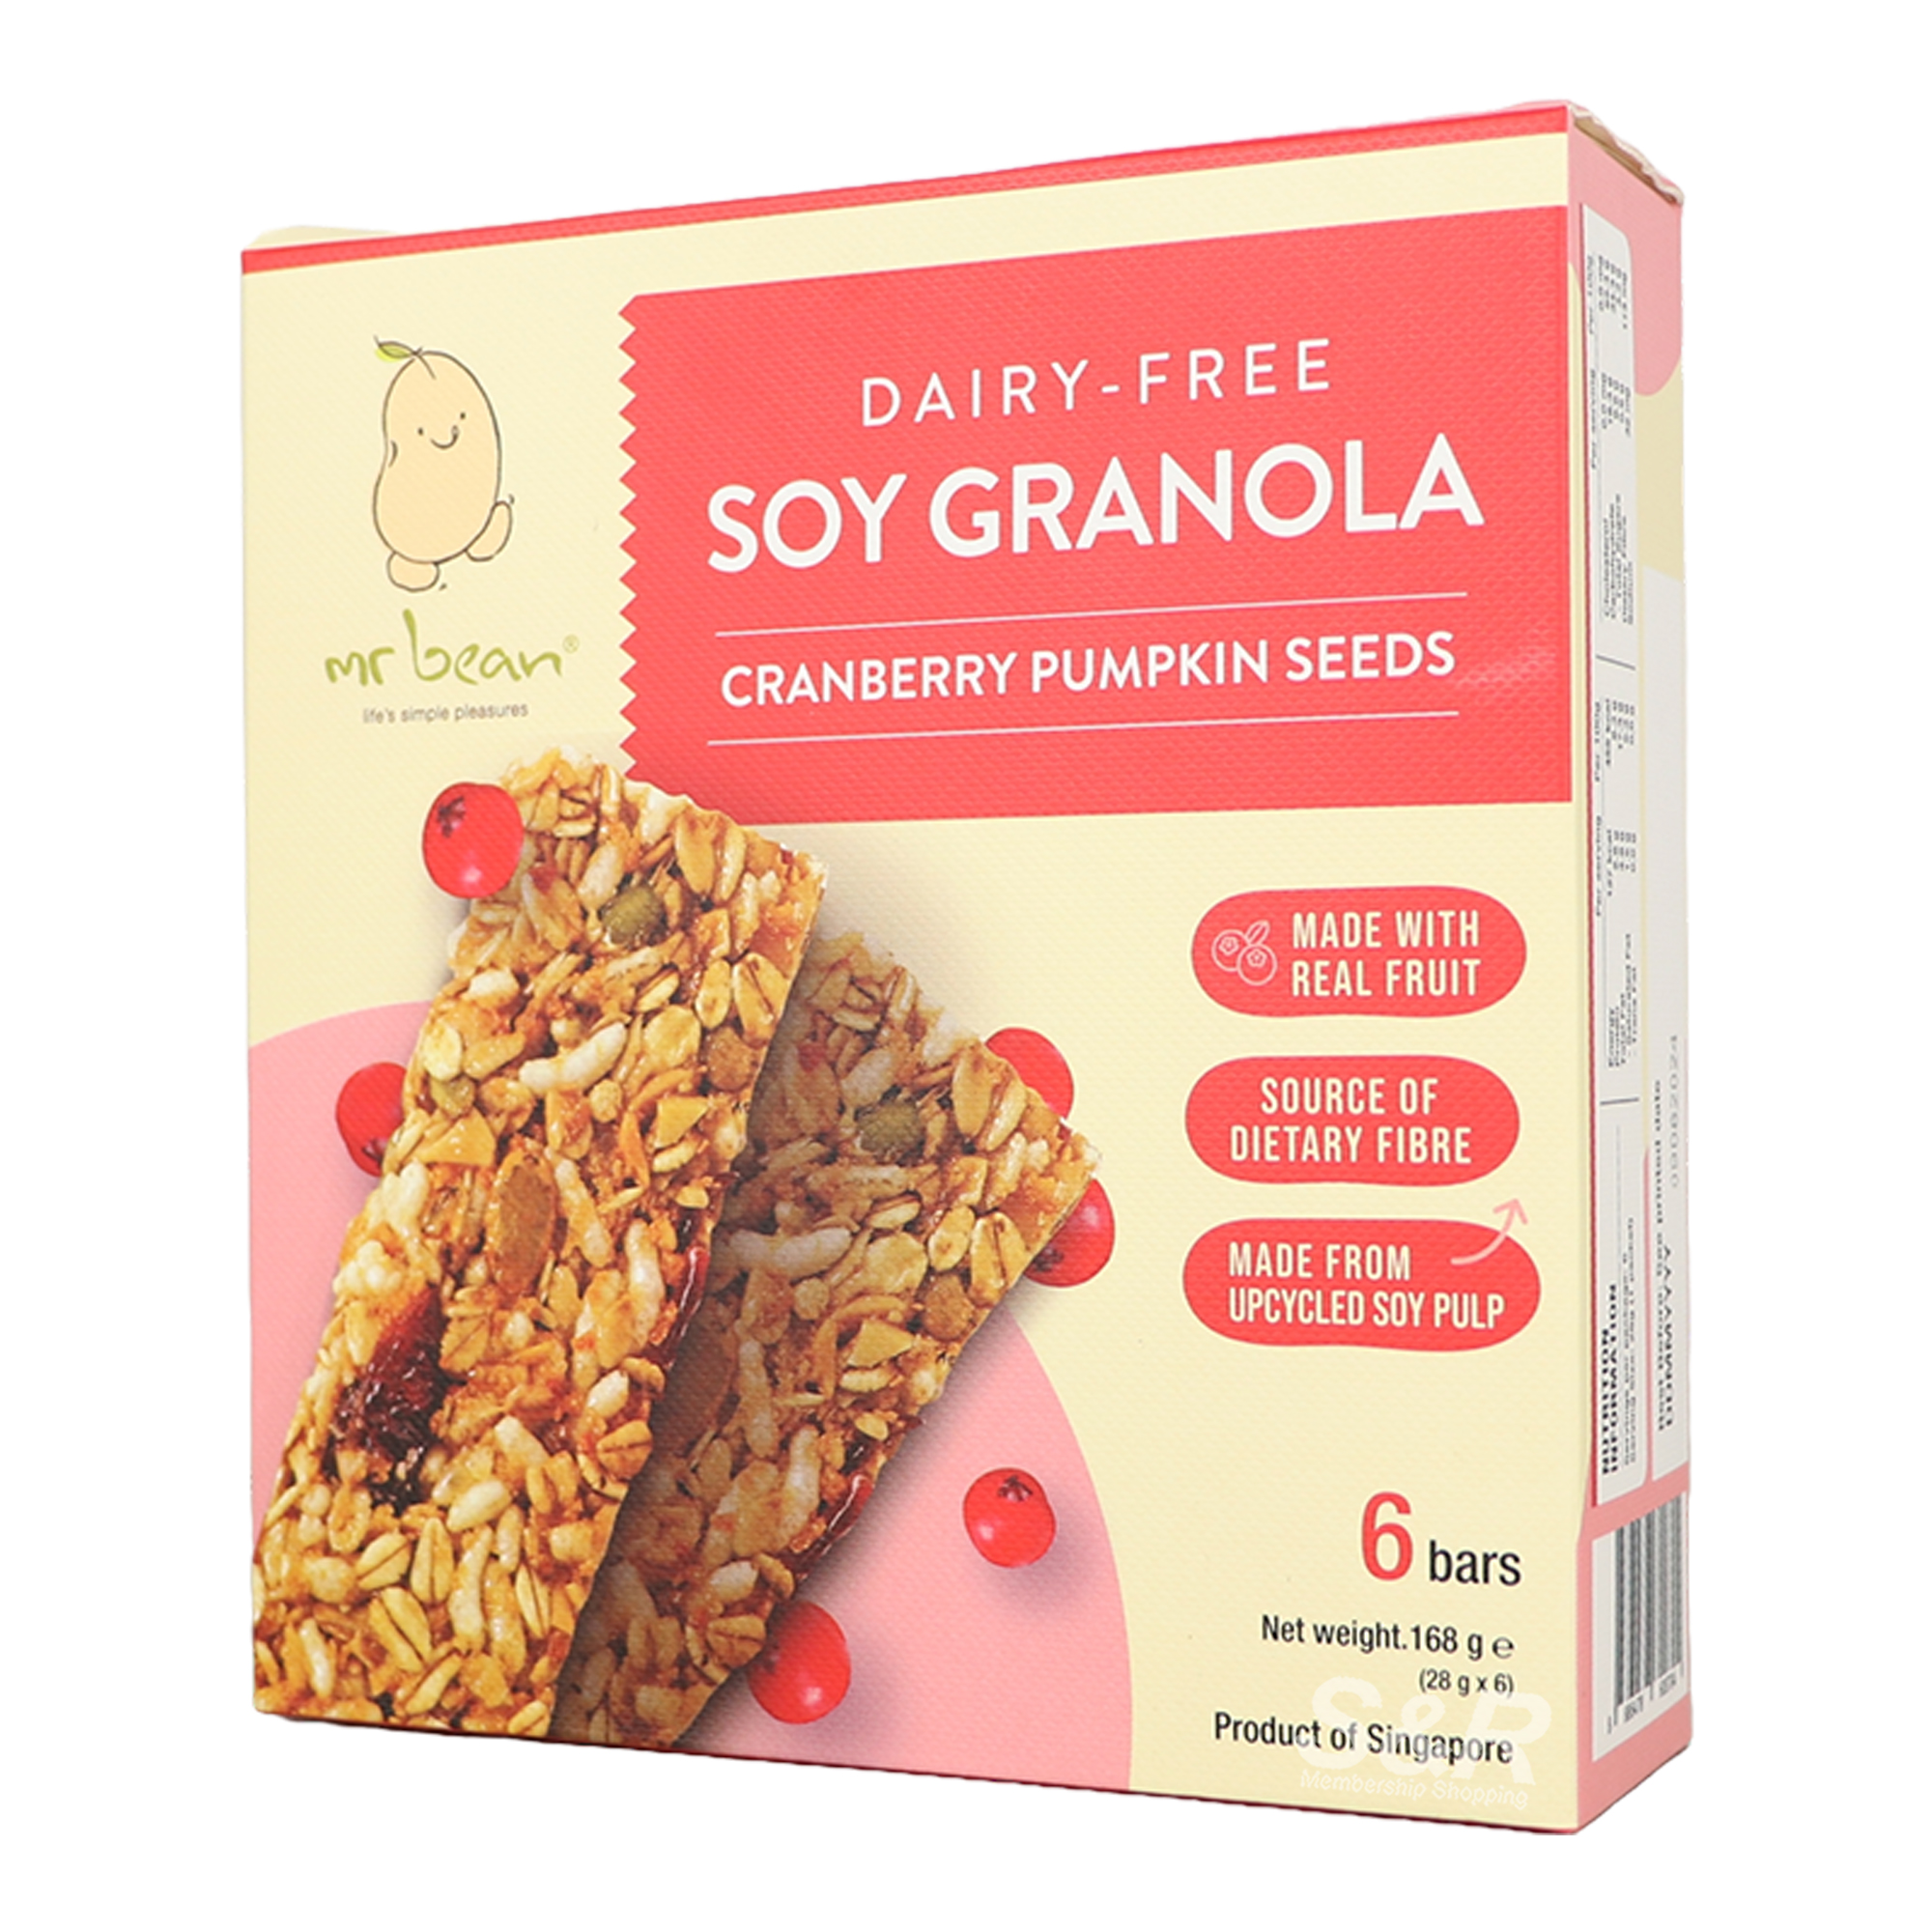 Mr. Bean Cranberry Pumpkin Seeds Soy Granola Bars 6pcs